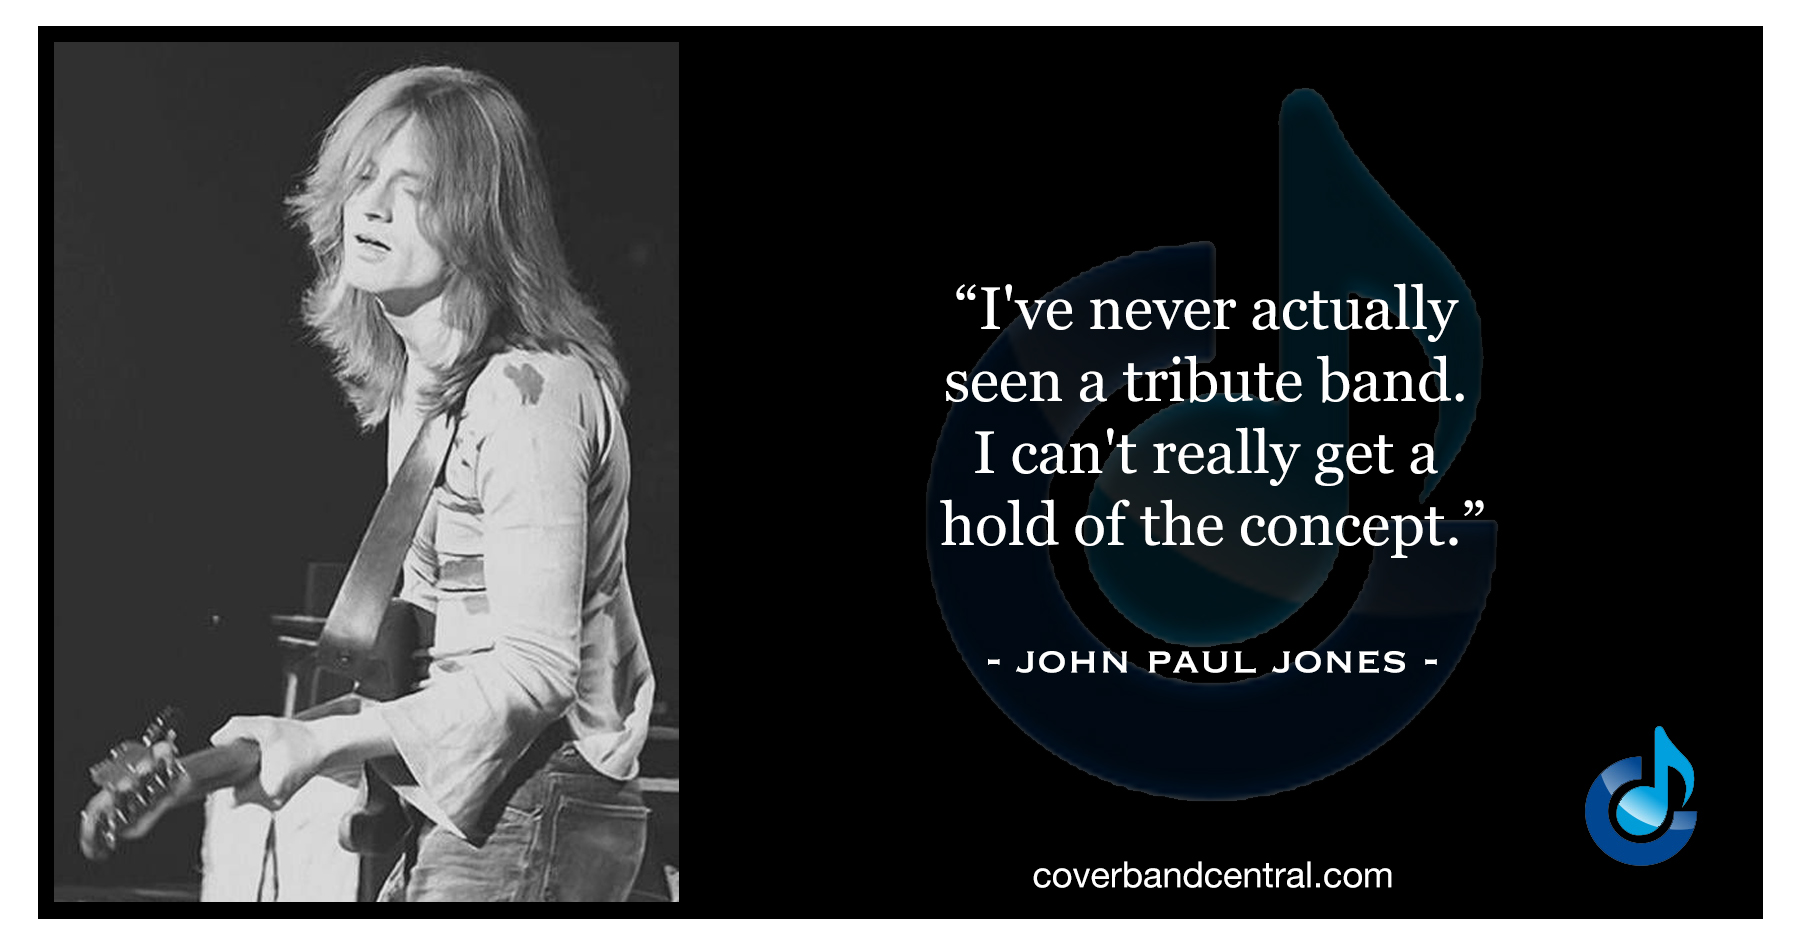 John Paul Jones quote